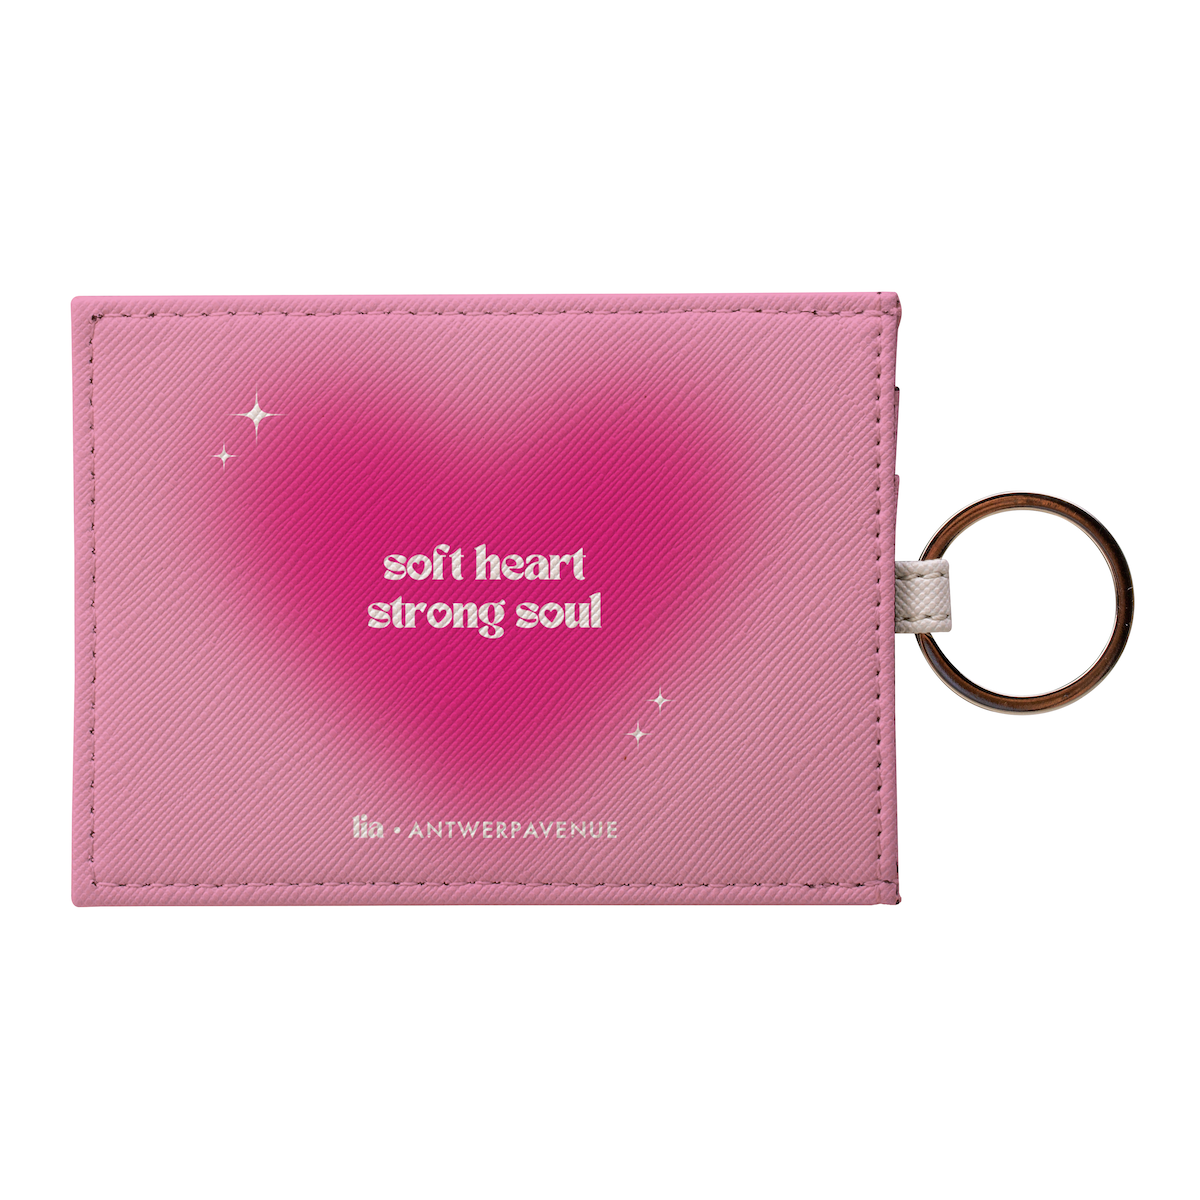 Soft Heart, Strong Soul - Card Holder